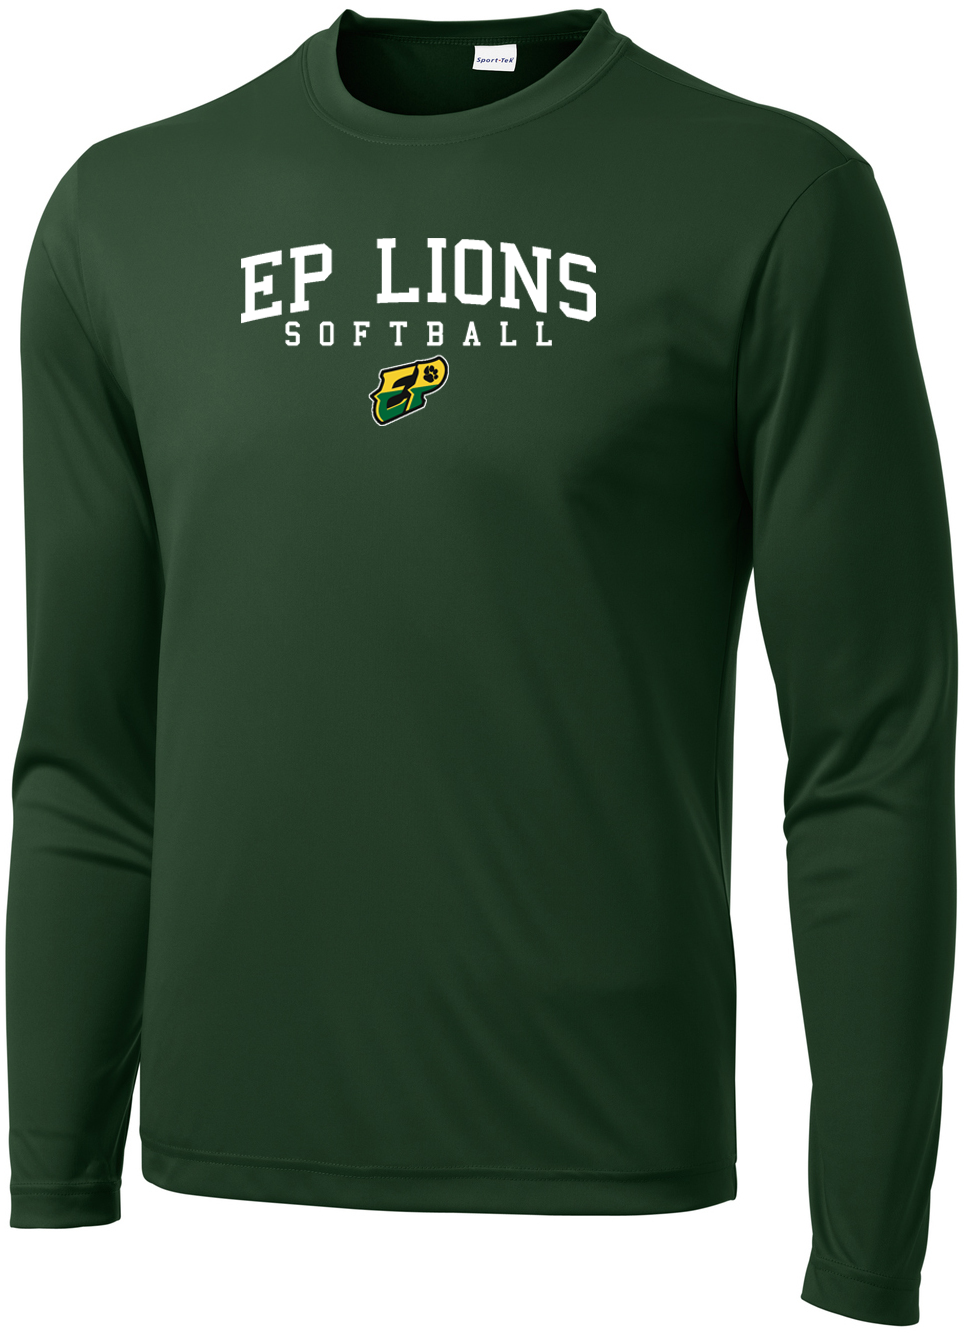 EP Lions Softball Long Sleeve Performance Shirt